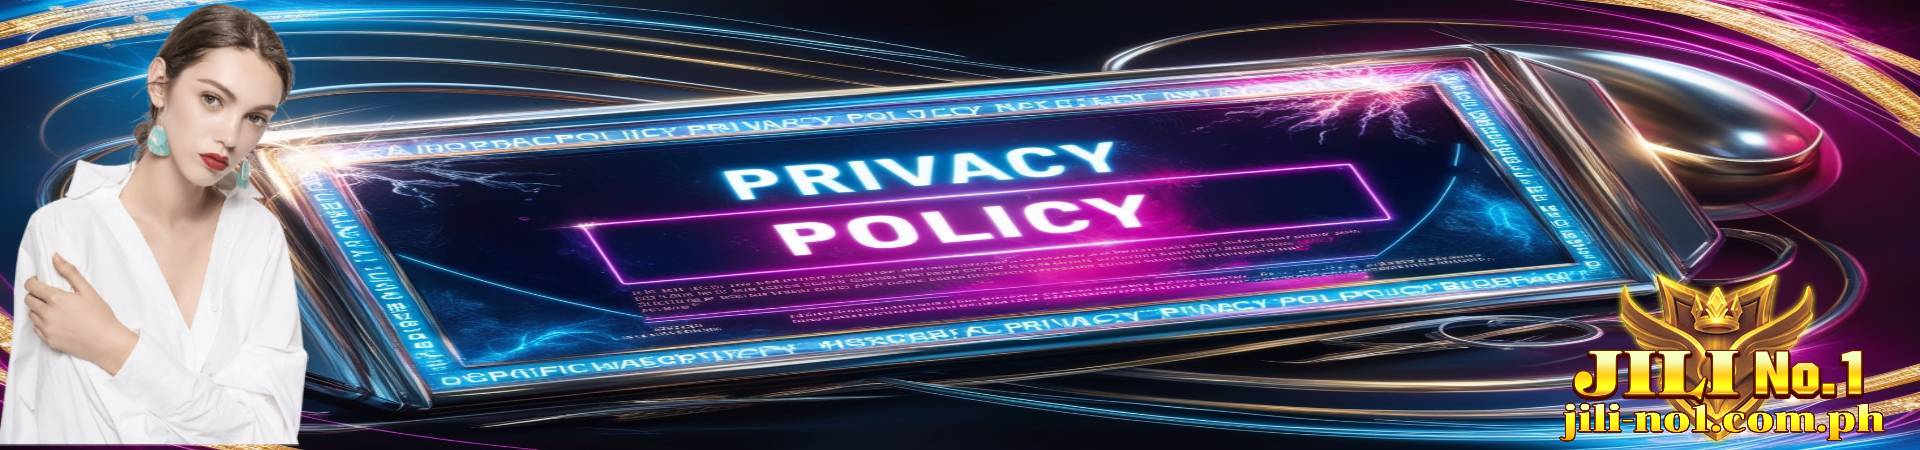 privacy policy jilino1 banner